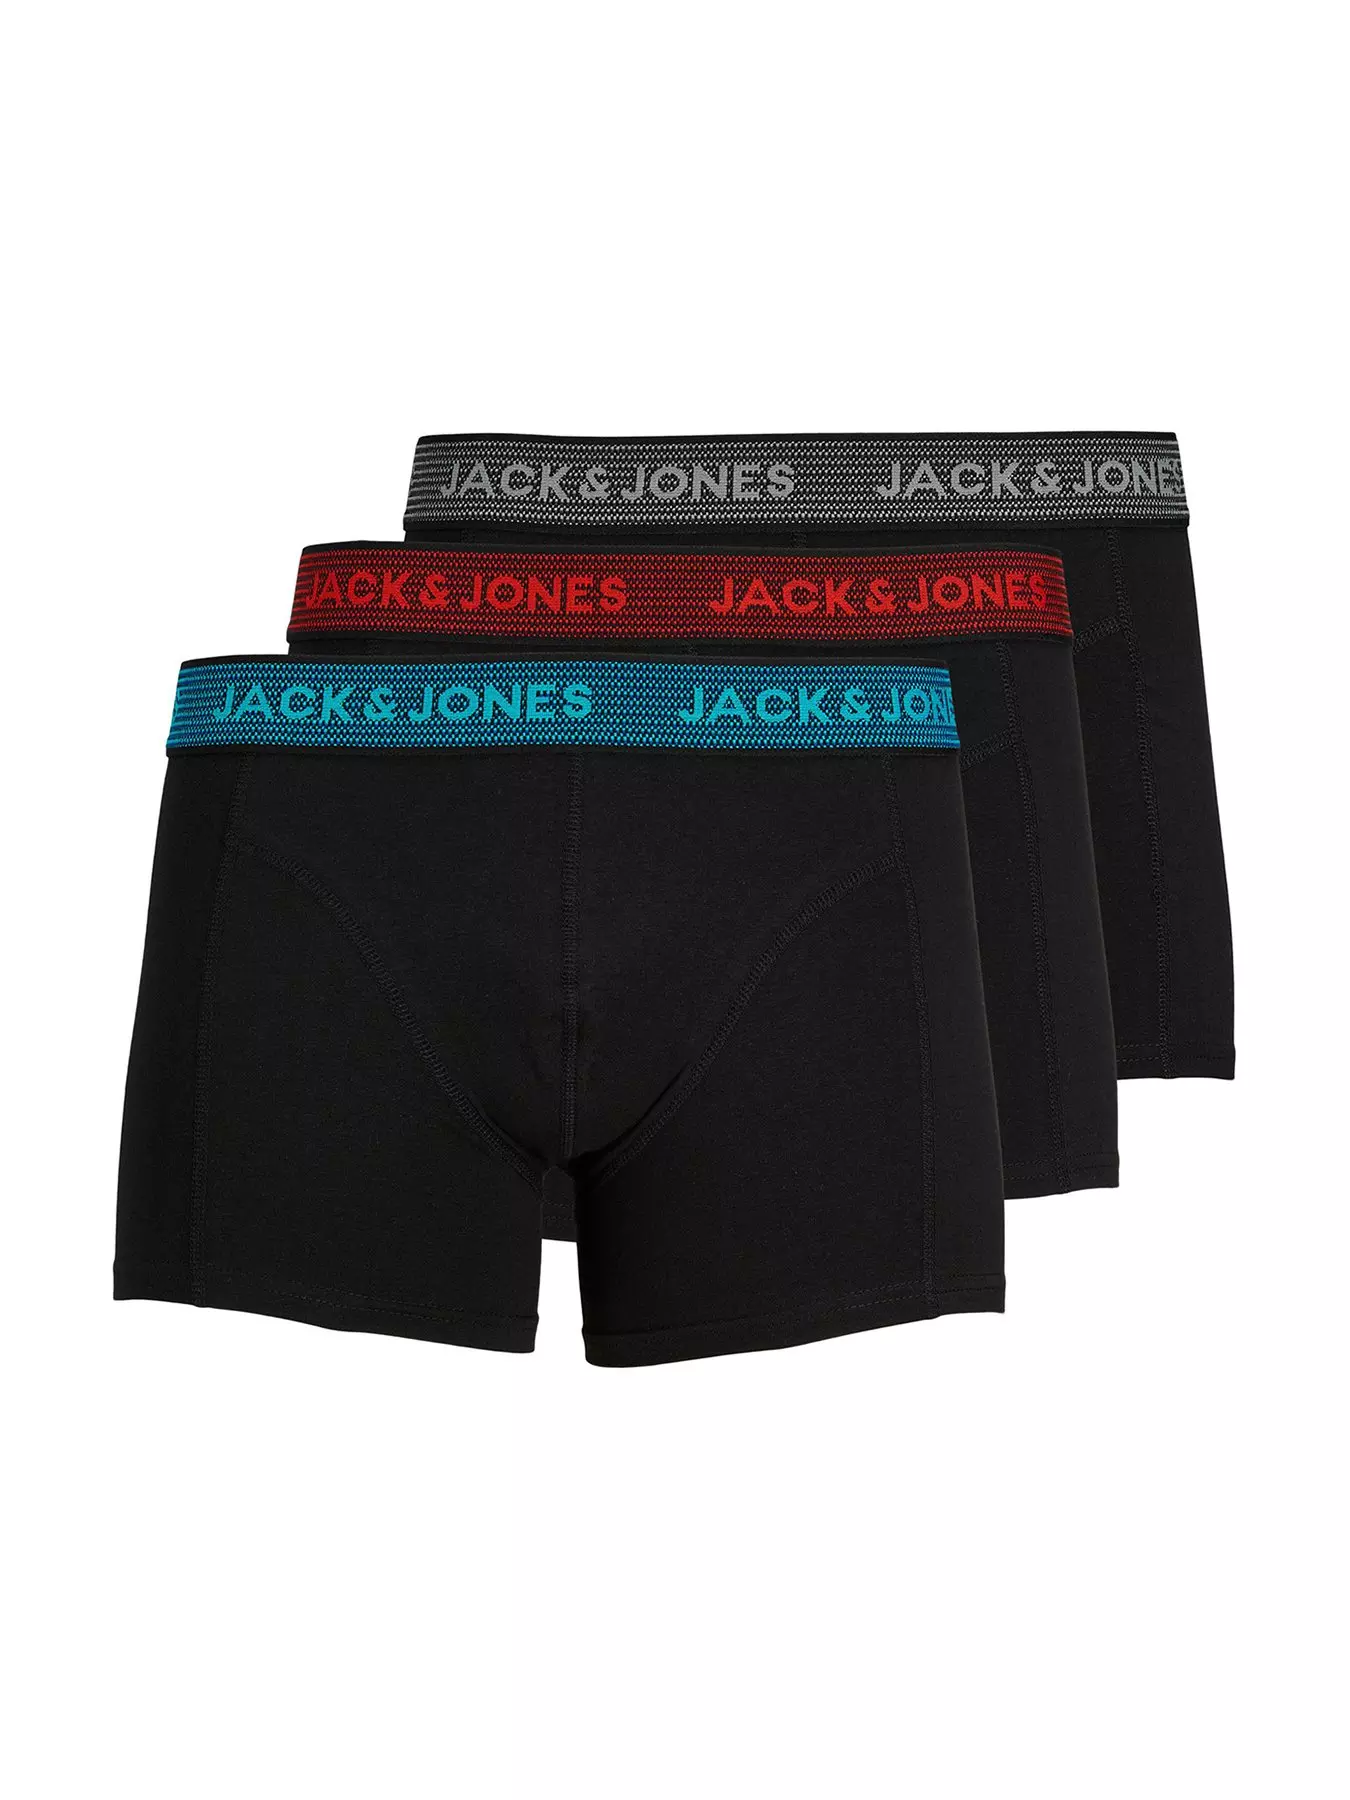 Adidas Men's Performance Mesh Boxer Briefs- 2 Pack, Black/Grey- Org $26  (B8)